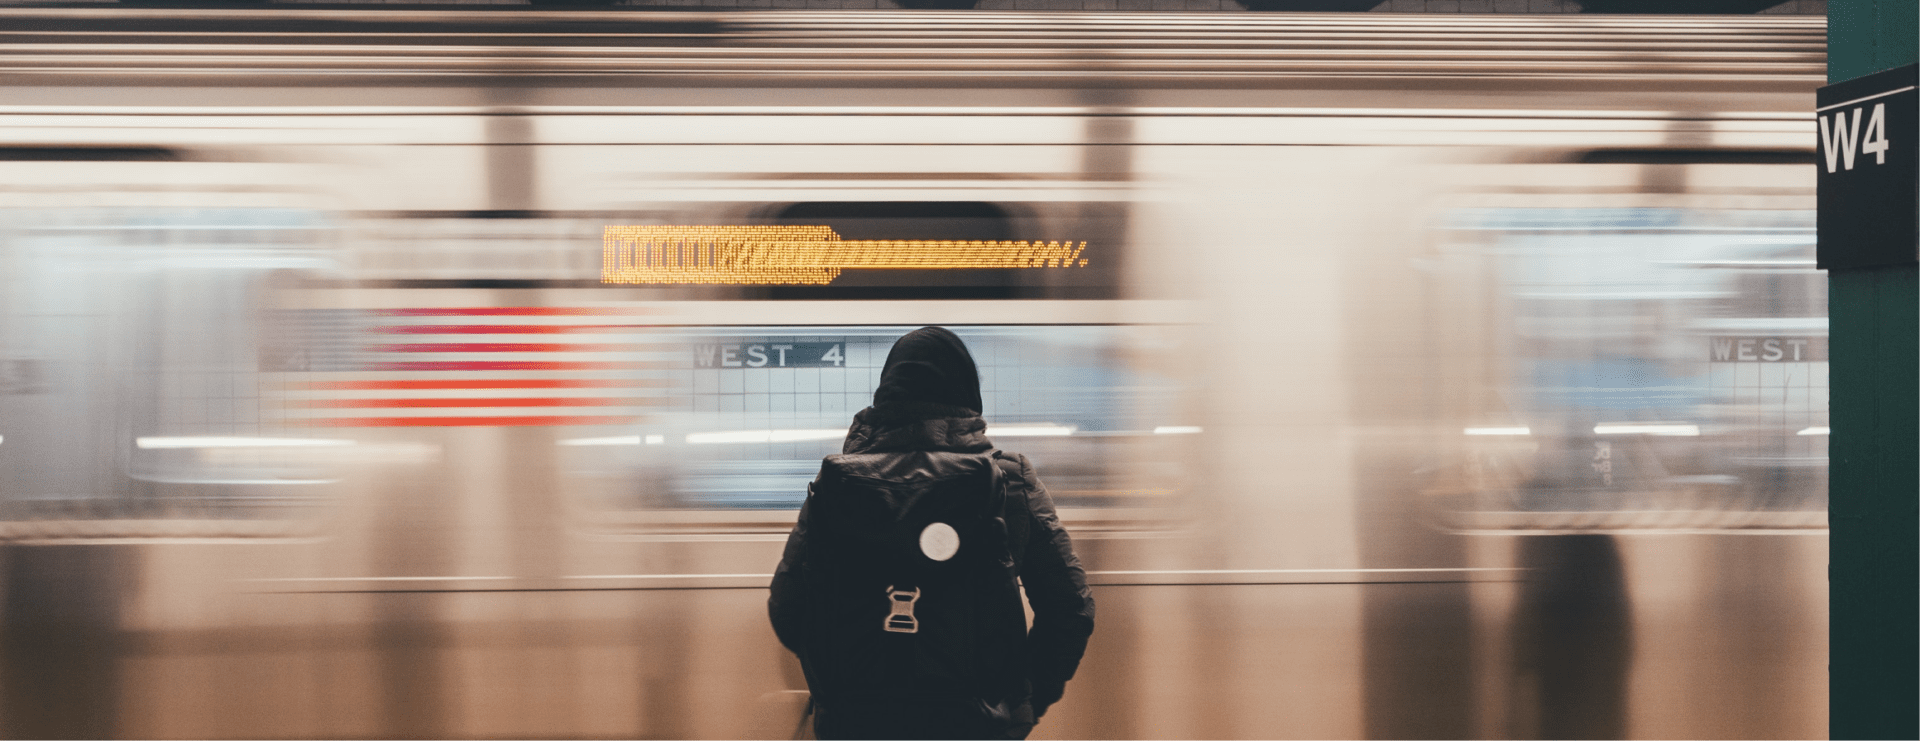 Man on the subway platform